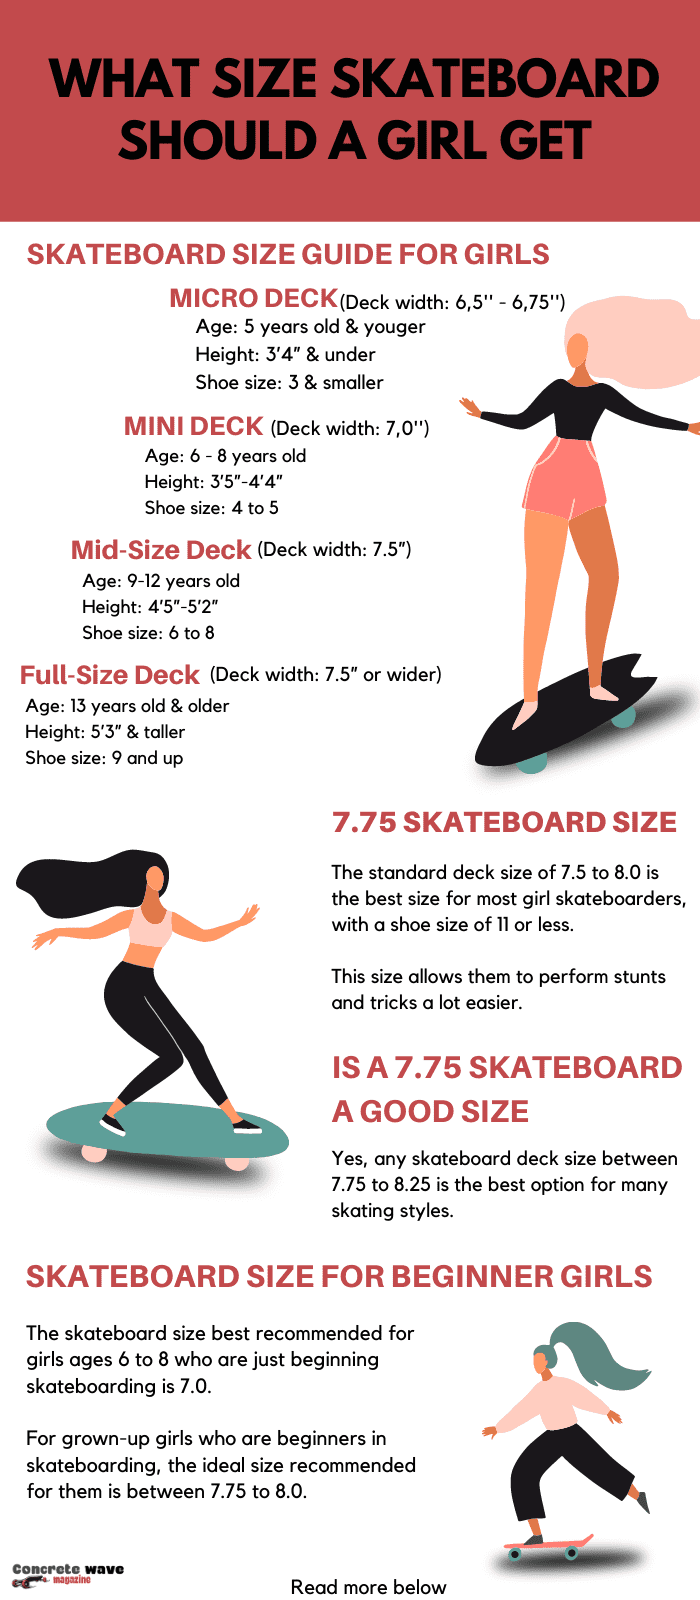 is-a-7.75-skateboard-a-good-size